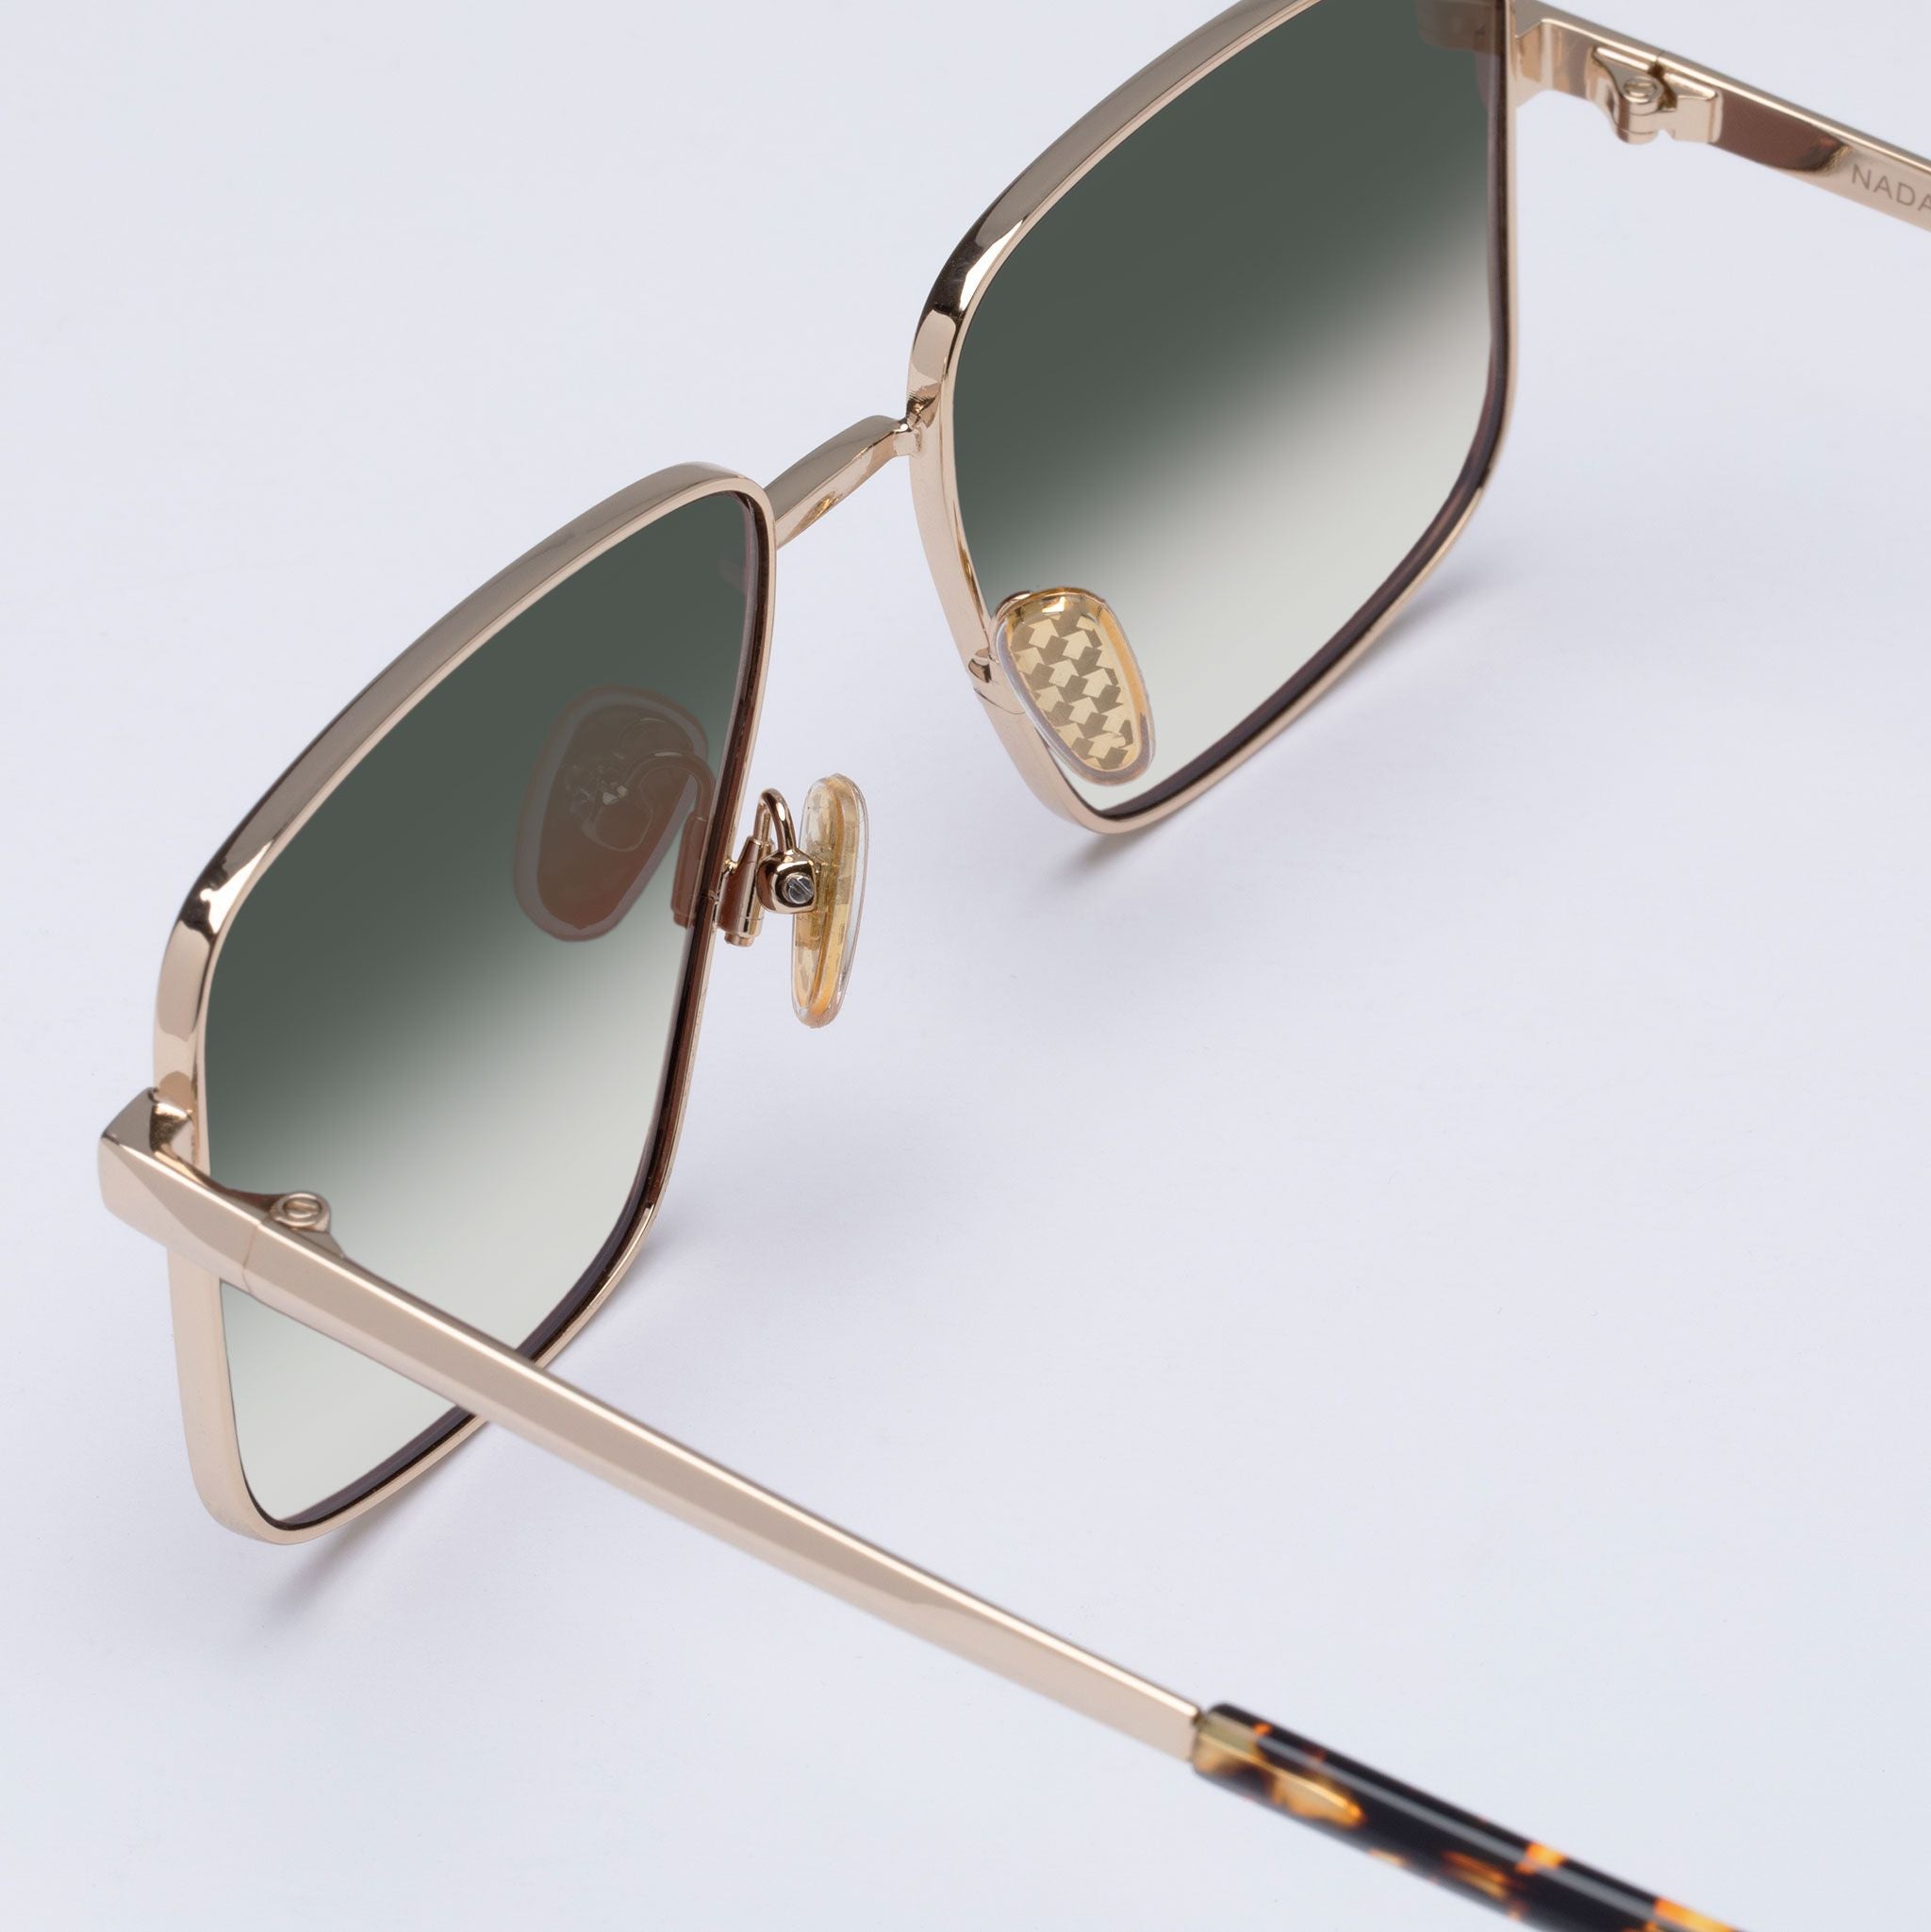 Louis Vuitton Attitude Sunglasses Unisex Gold Rimmed Adjustable Handles